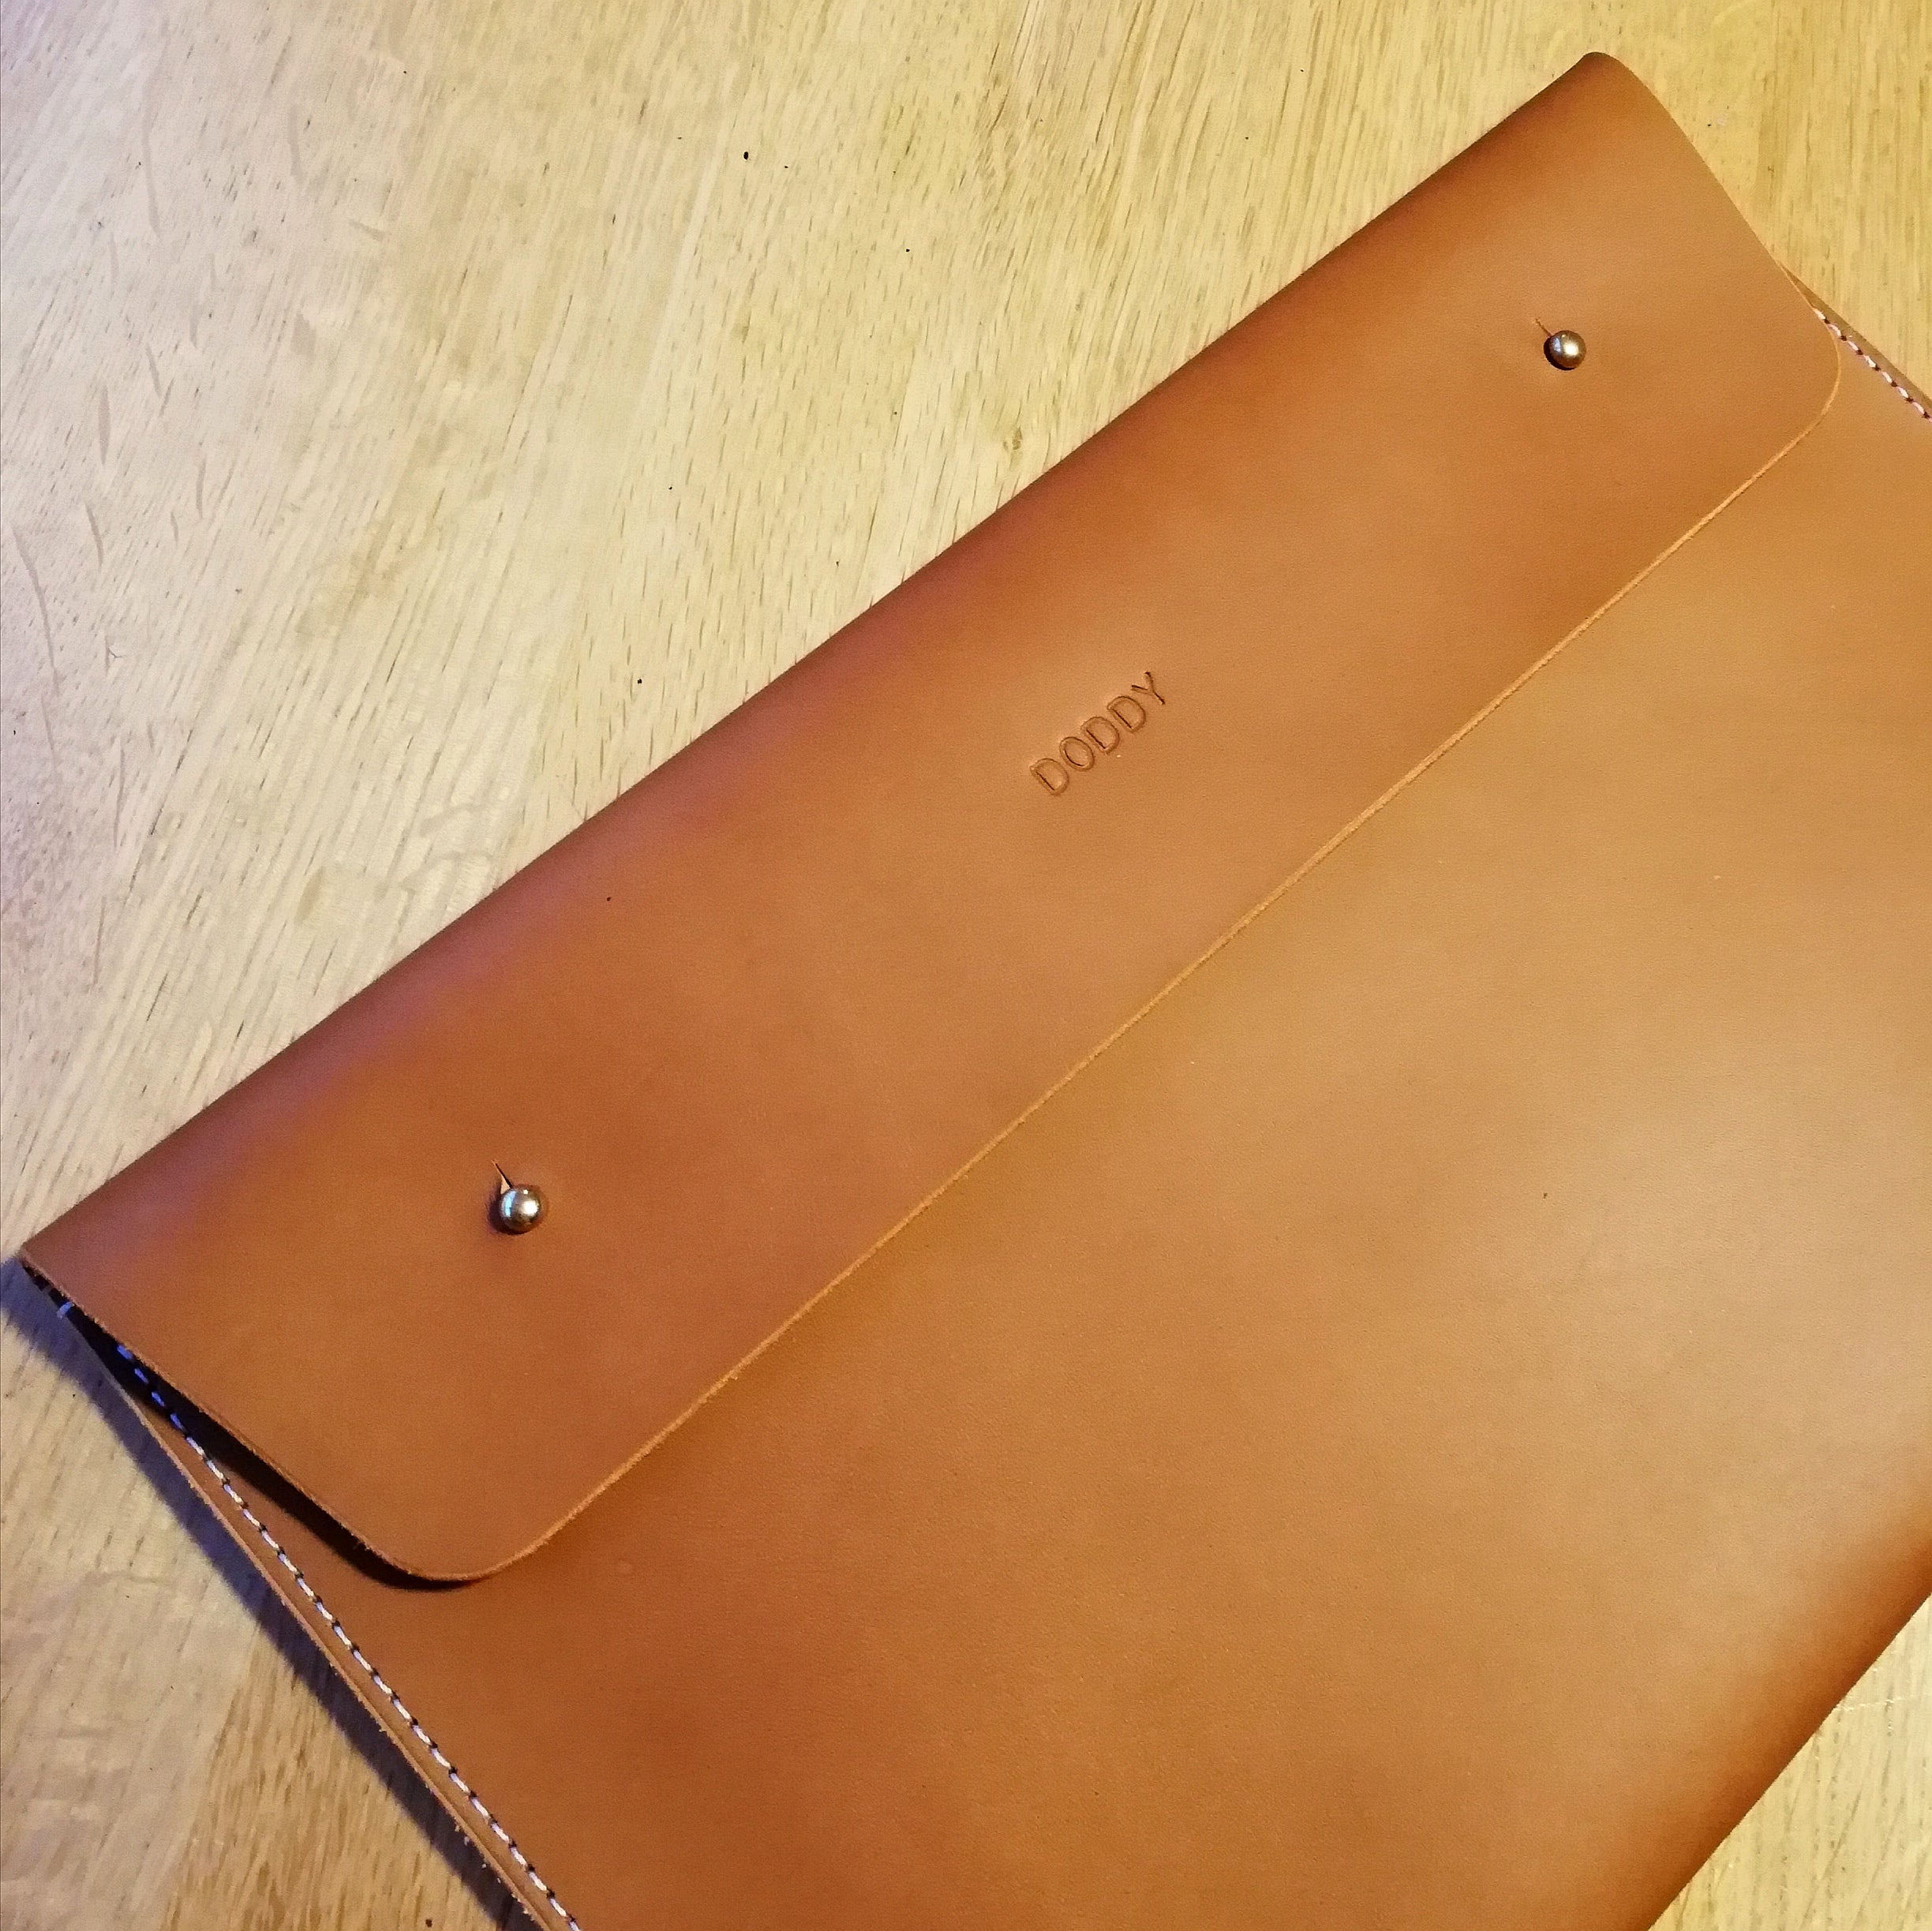 Personalised Handmade Leather Document Case